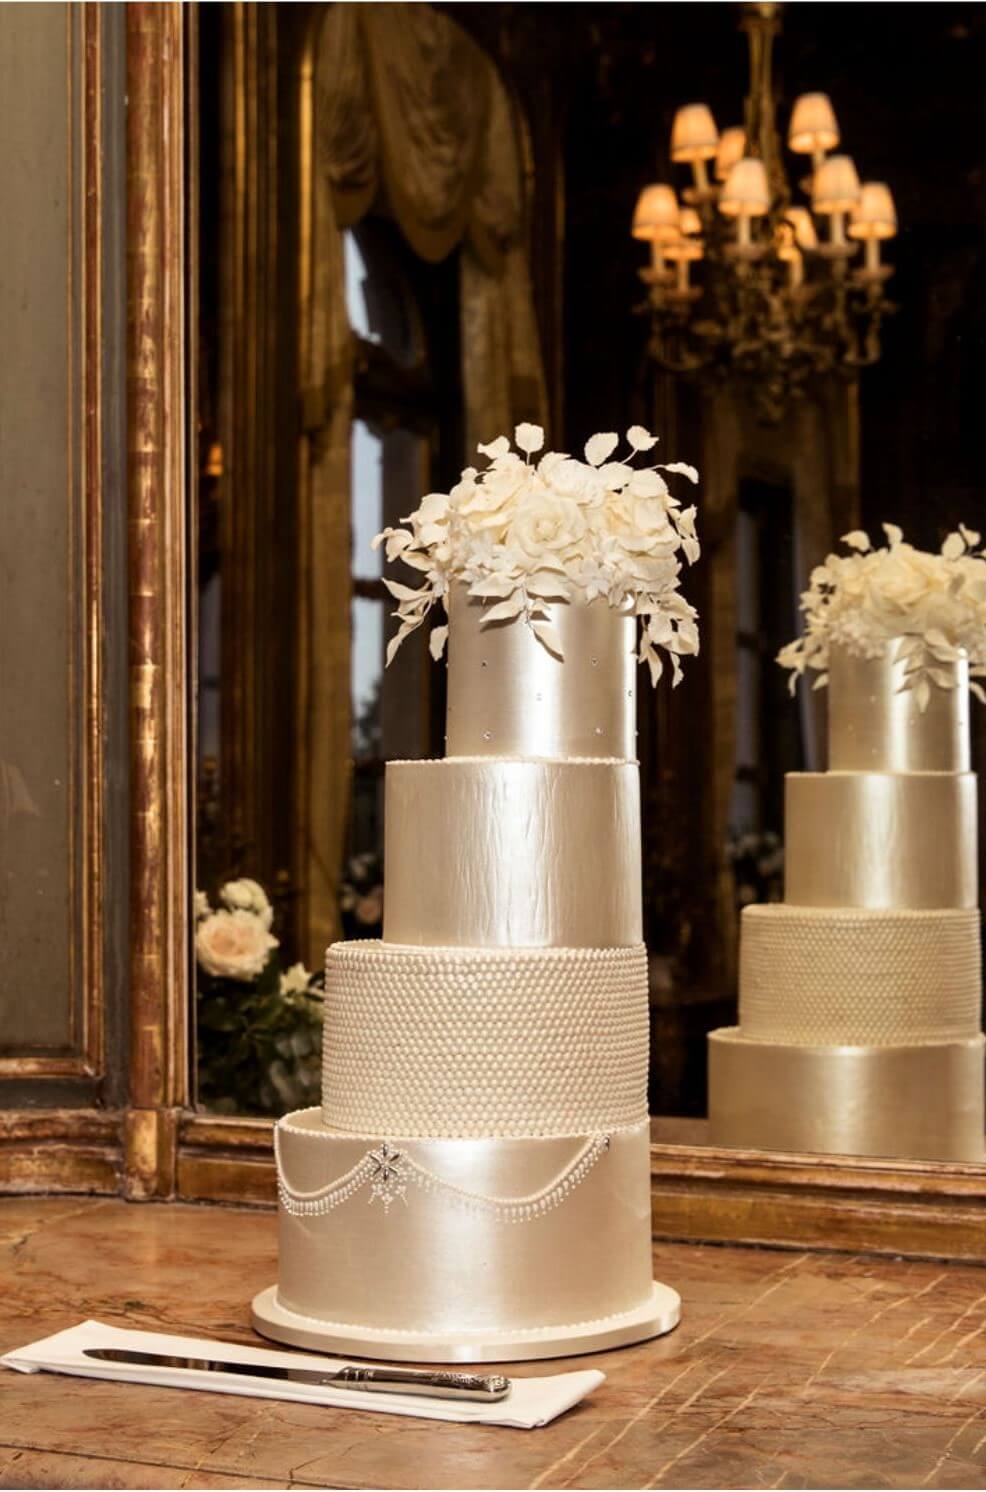 By Yevnig Stunning Wedding Cakes - Claridges Hotel - Charlie Daily Photo